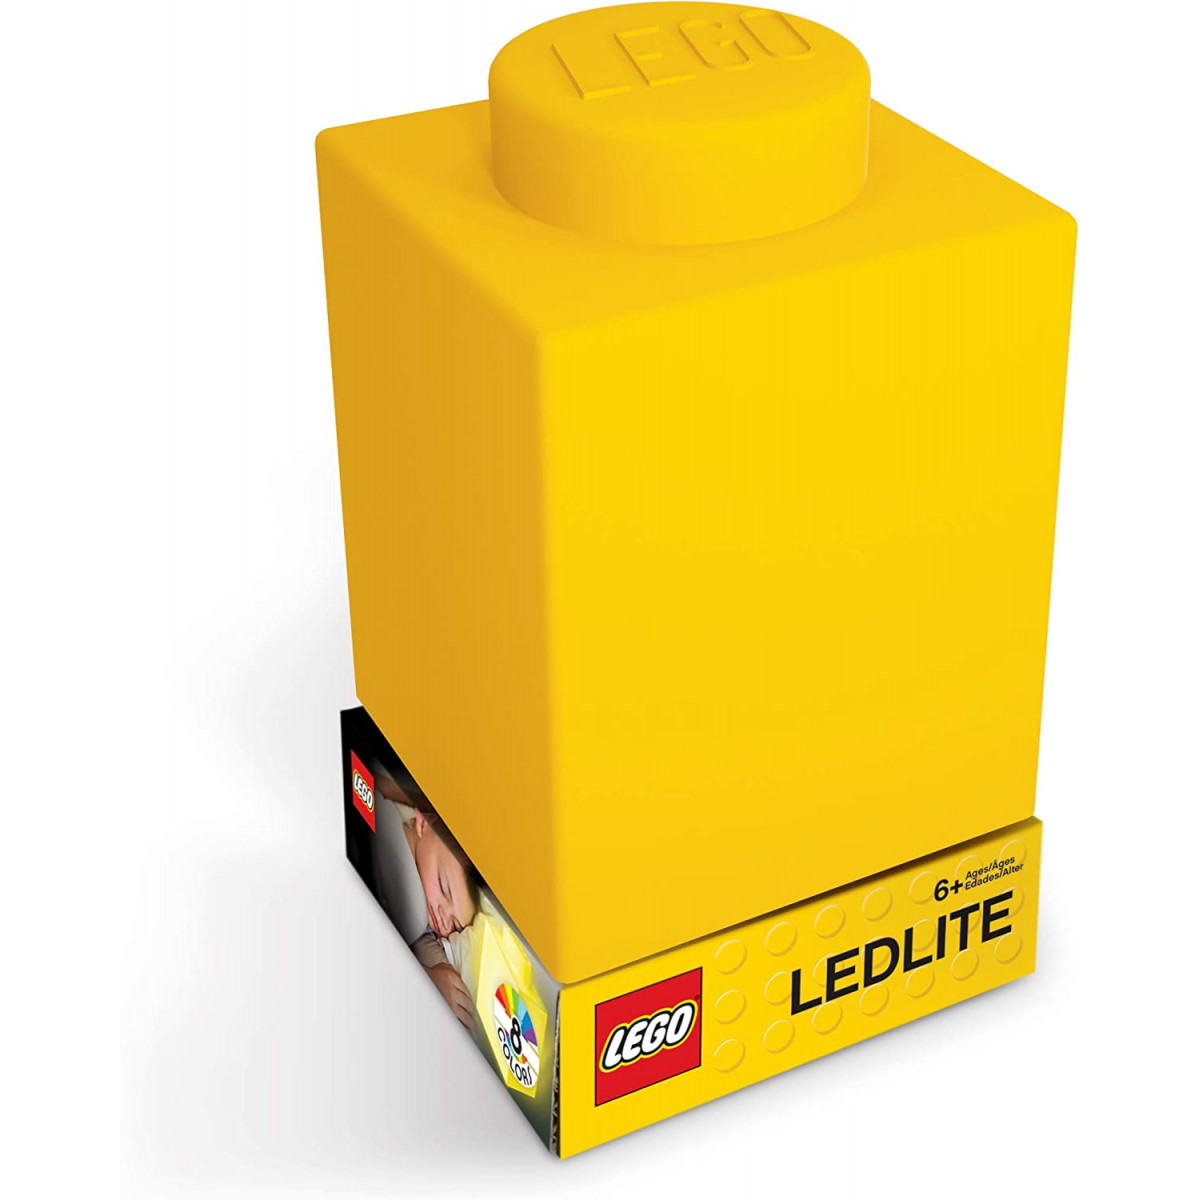 Lego LGL-LP39 - Brick led nightlights